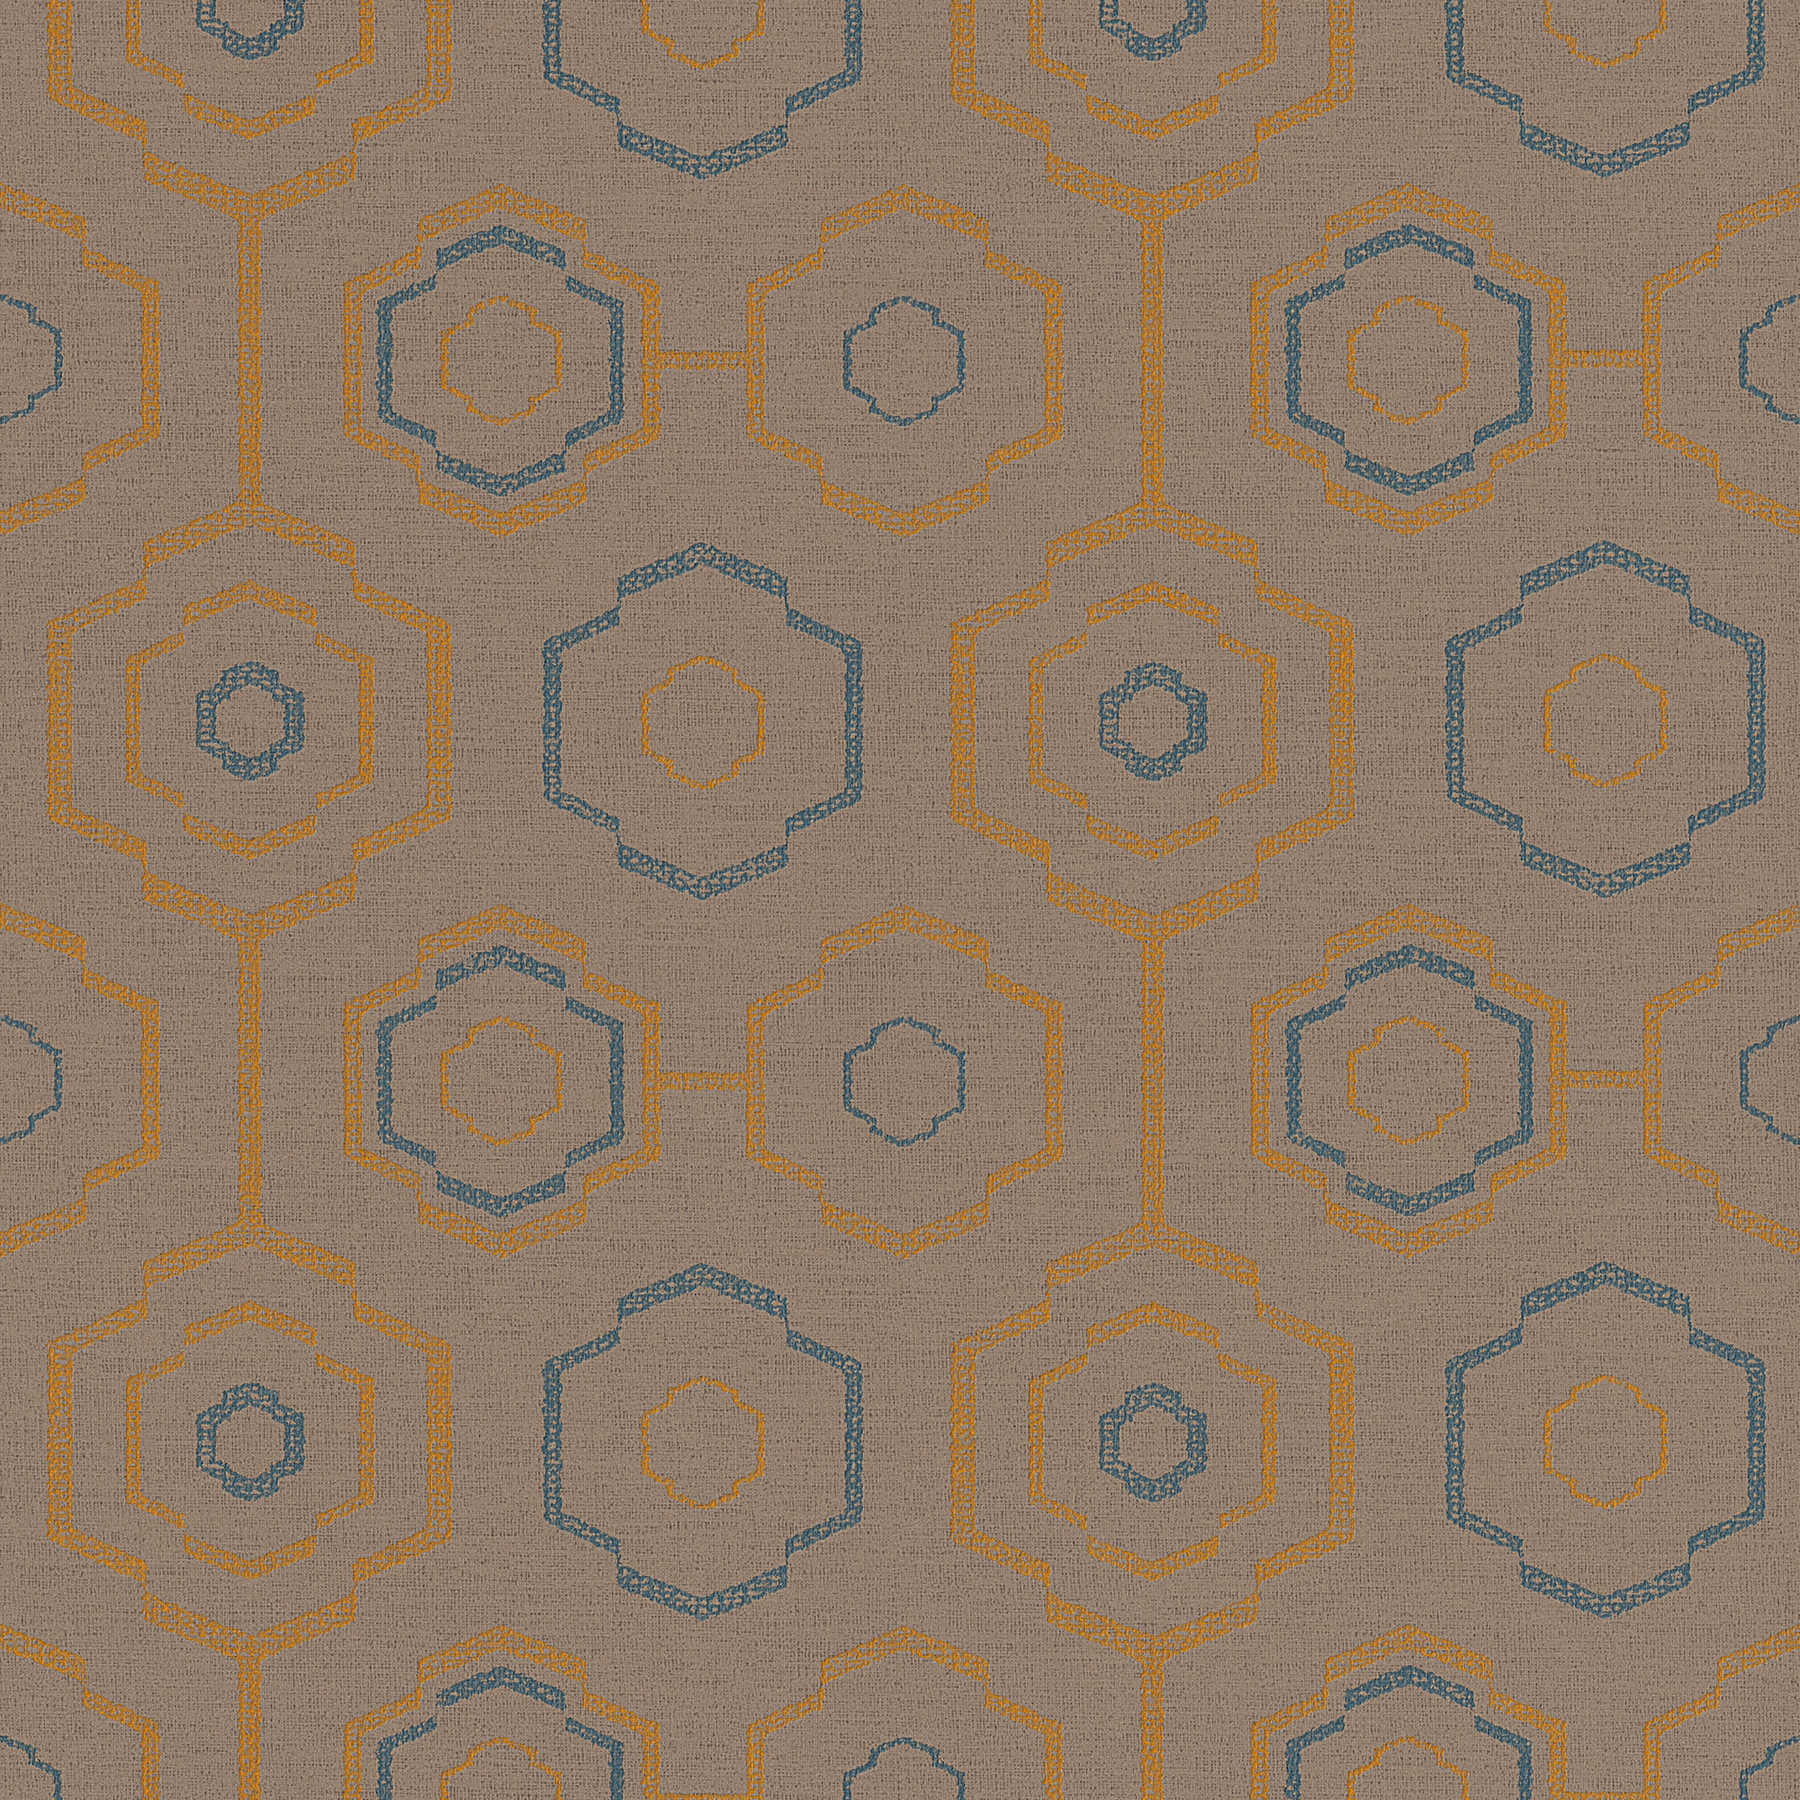 Wallpaper indigenous textile pattern with geometric design - brown, blue, orange
